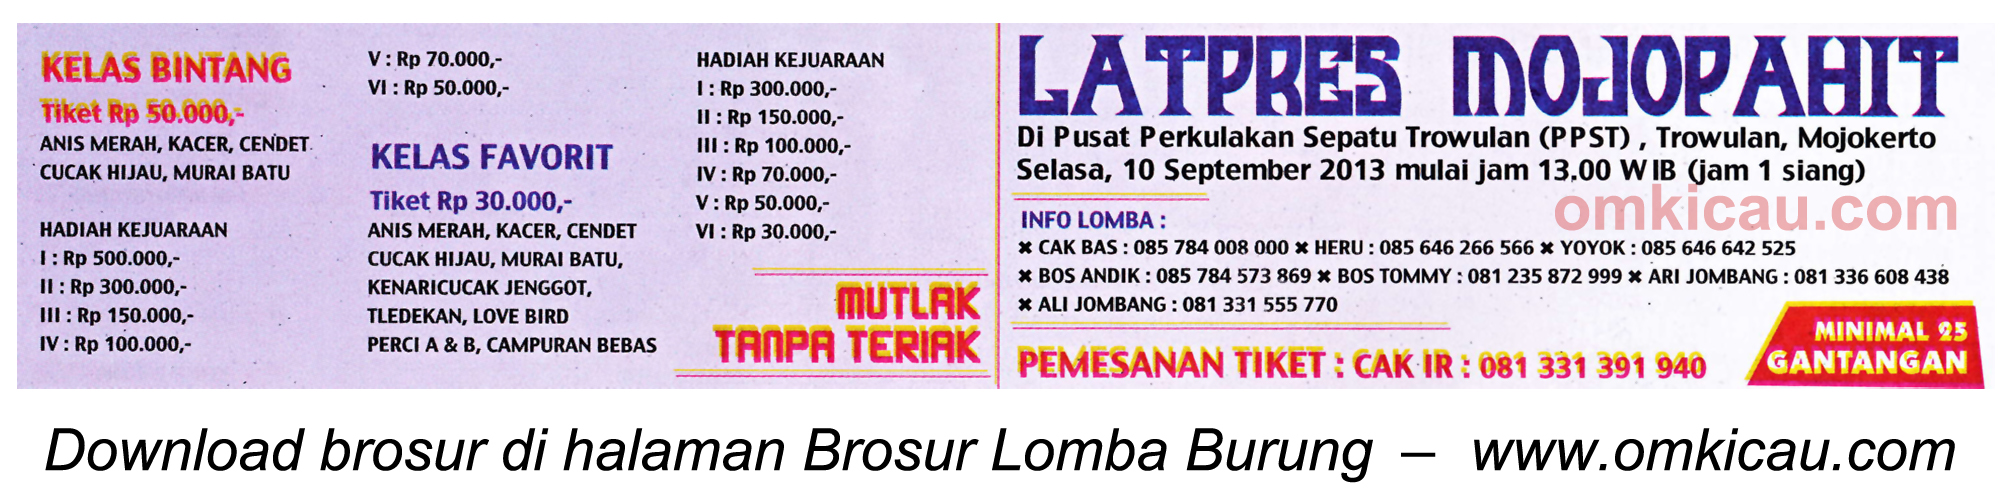 Brosur Latpres Mojopahit, Mojokerto, 10 September 2013